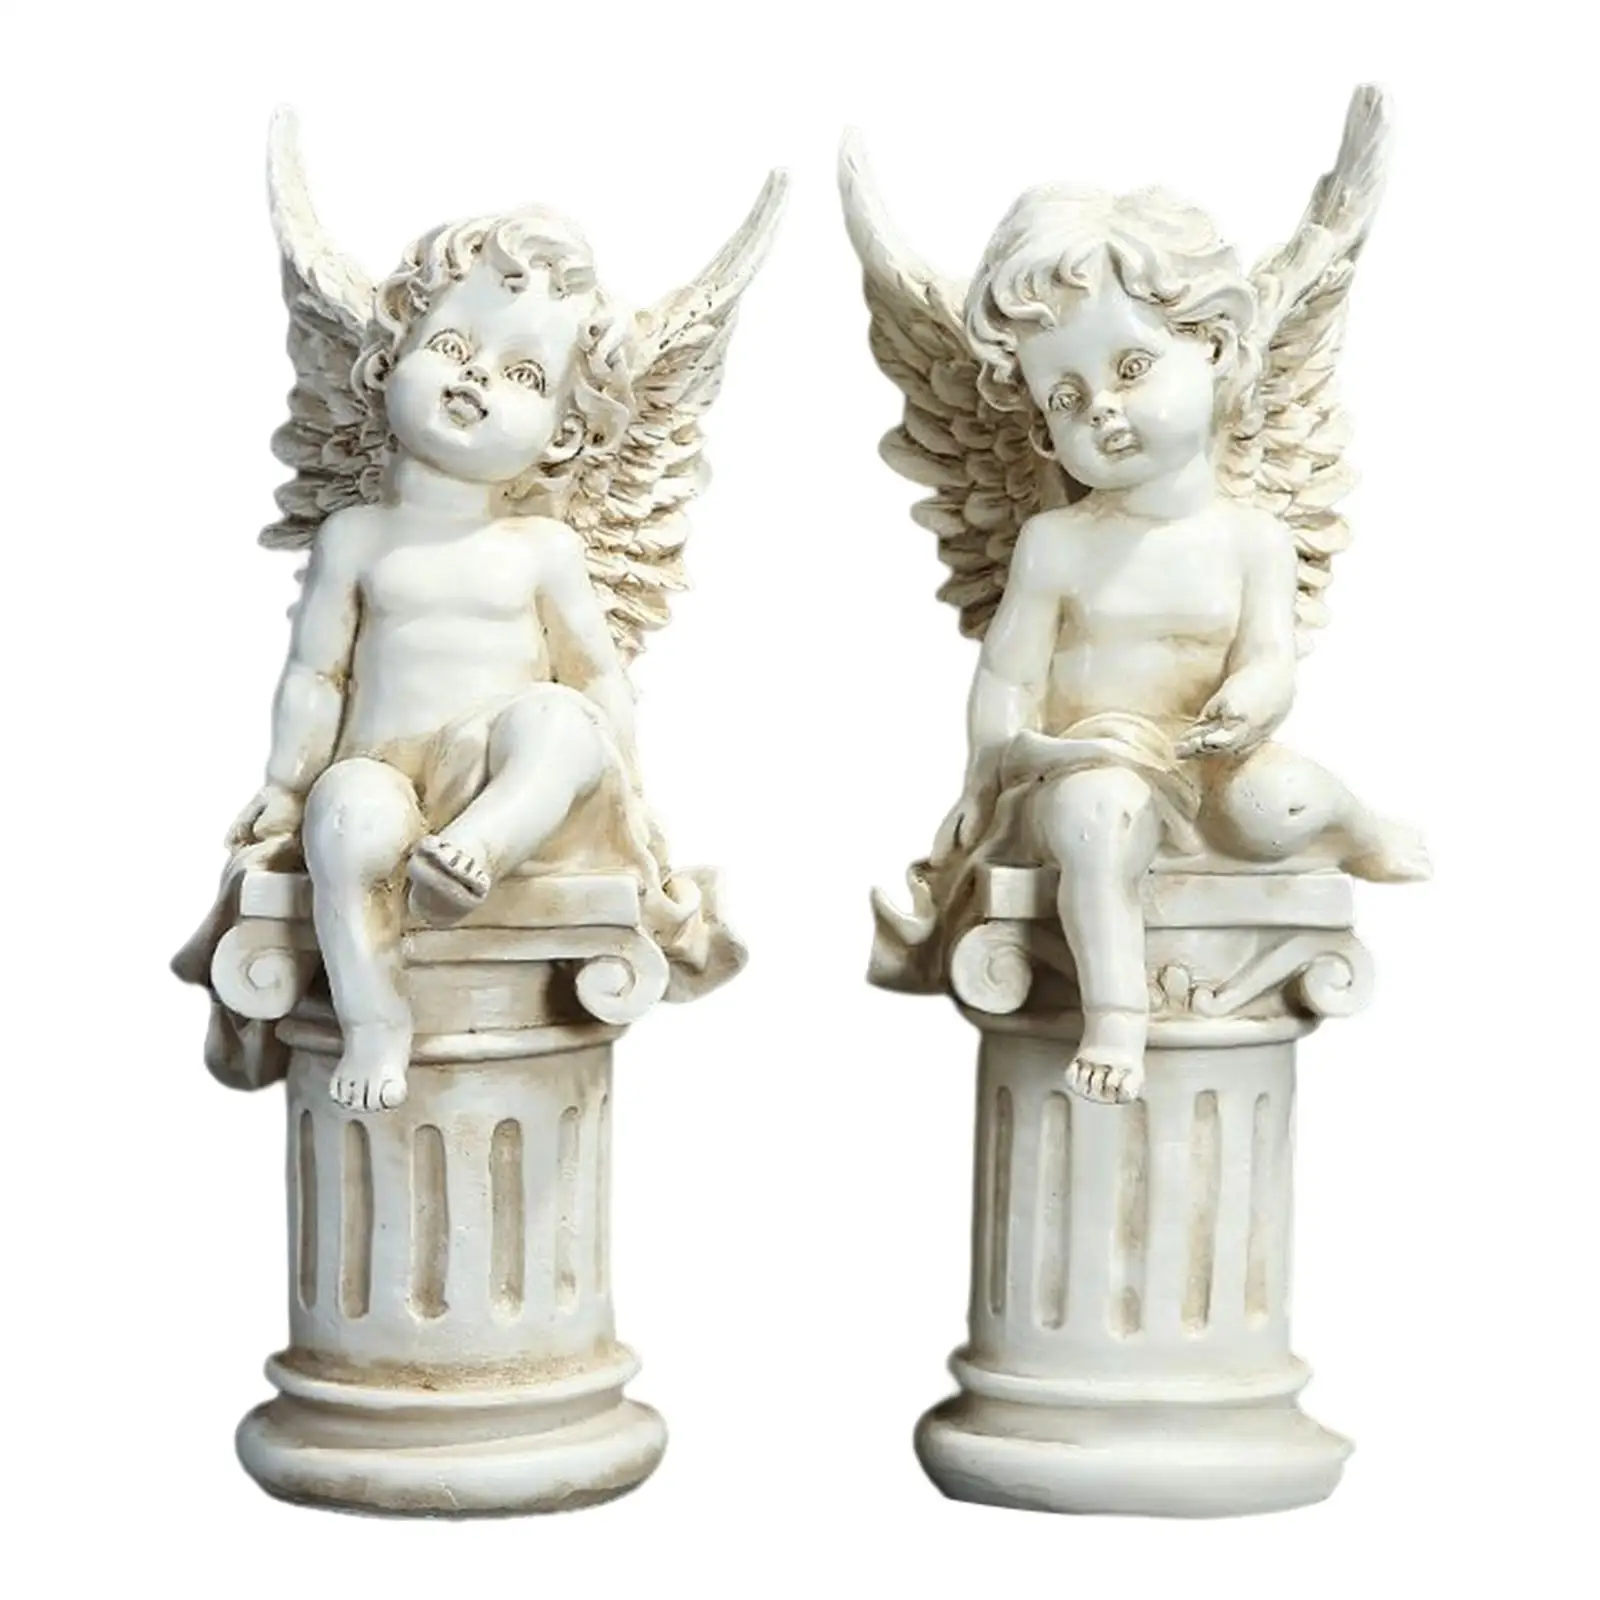 2x Cherub Statues Greek Column Resin Decoration Props Garden Figurines